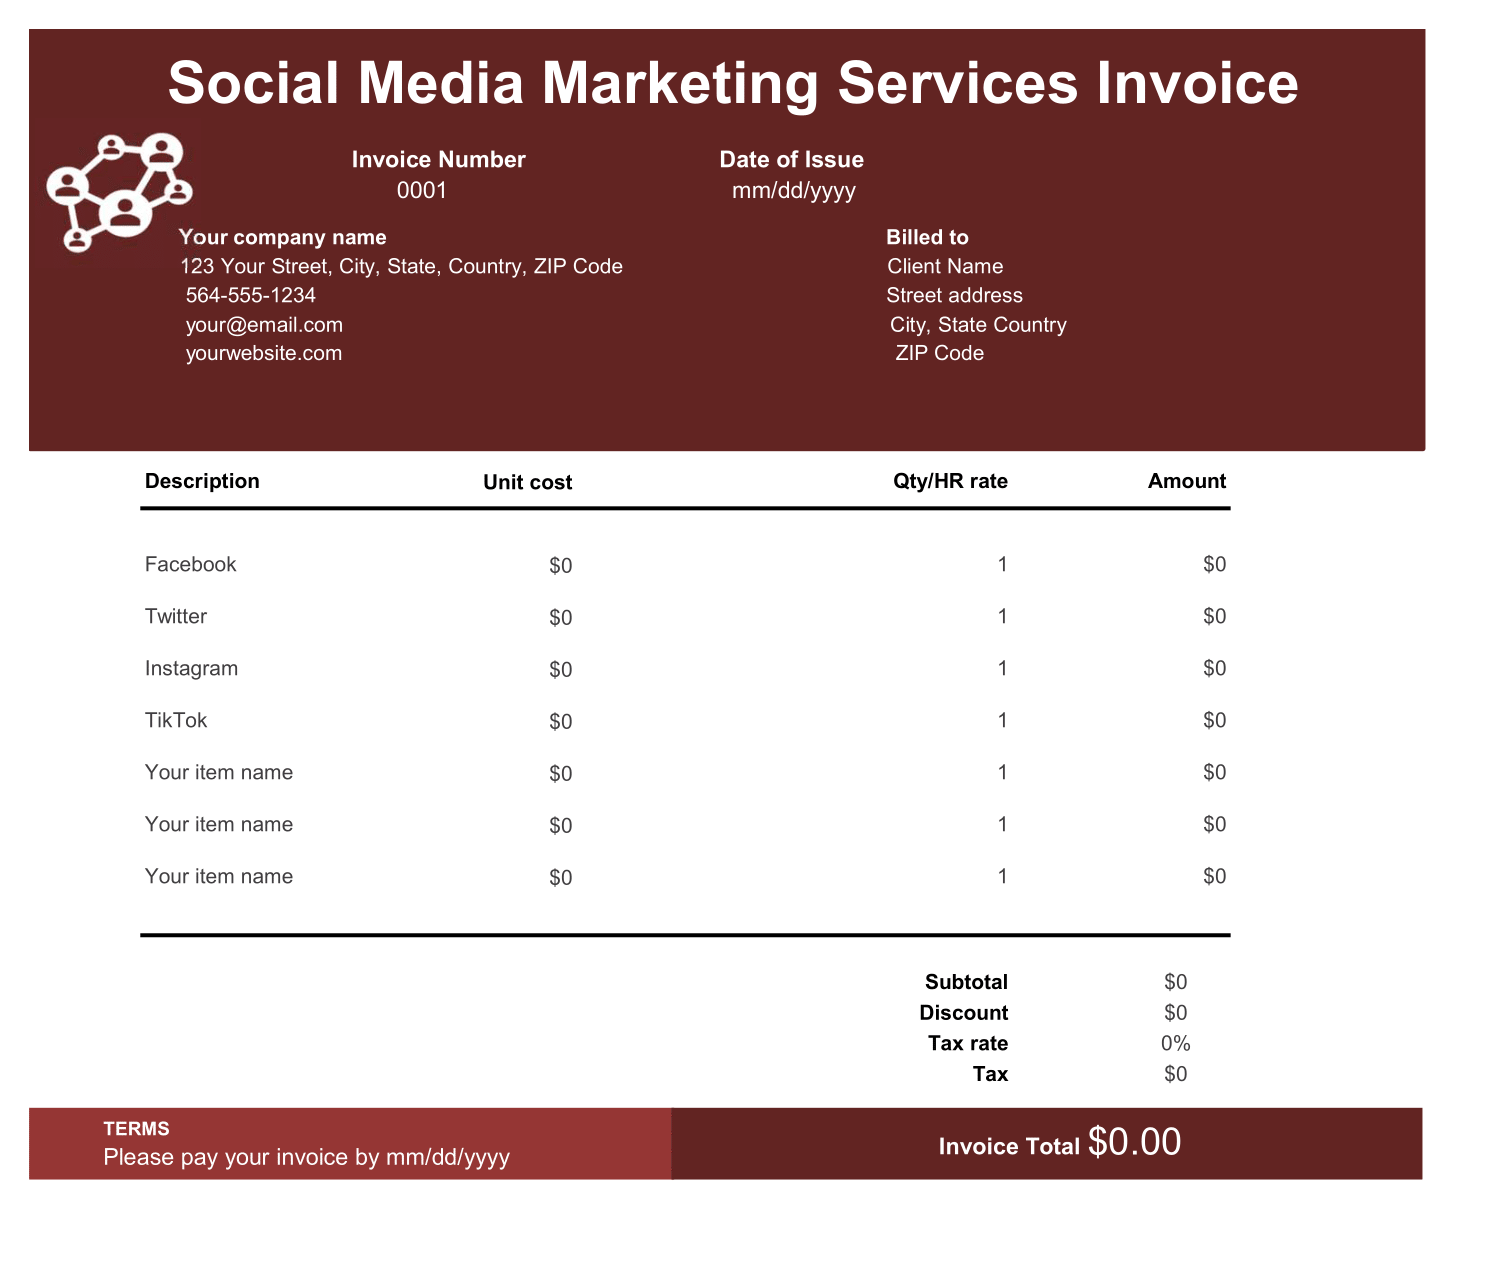 Social Media Marketing Services Invoice Format